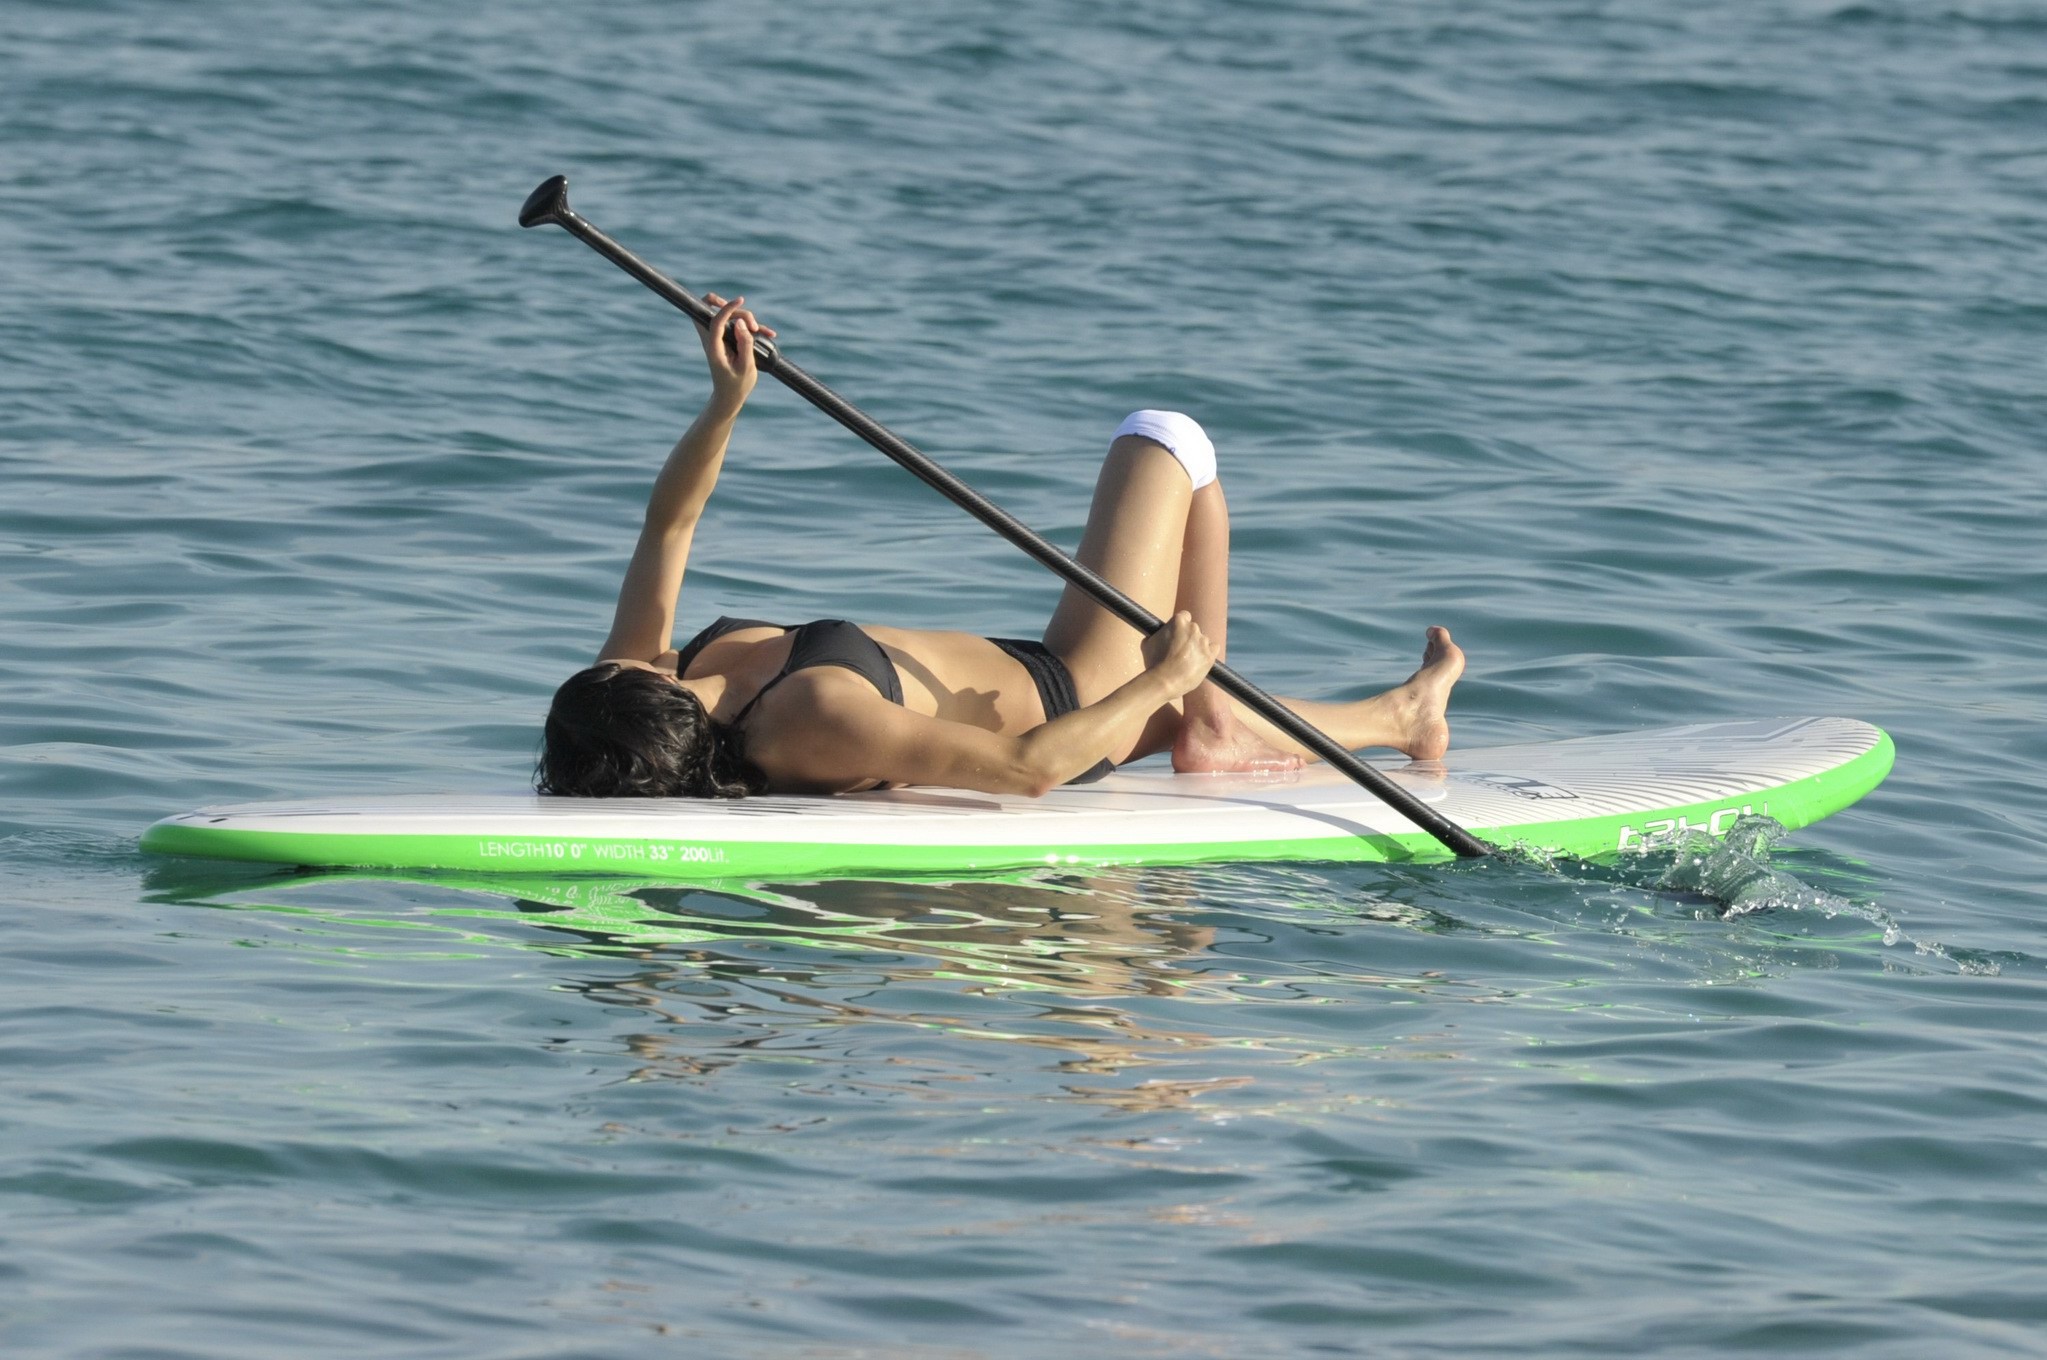 Michelle Rodriguez paddling in skimpy black bikini #75155826